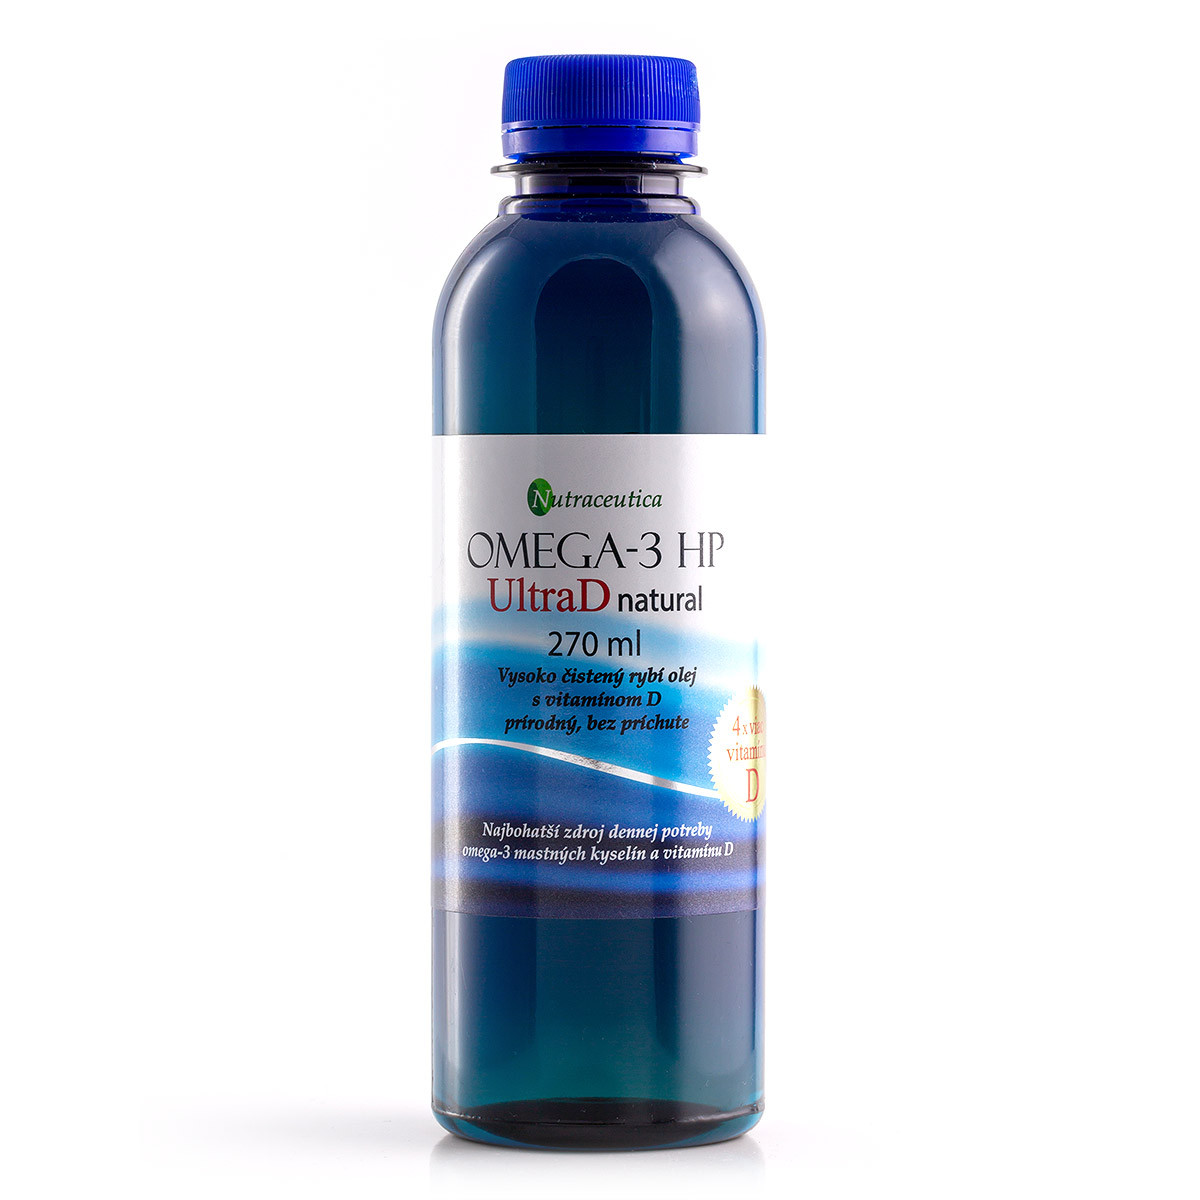 omega-3 UltraD nutraceutica